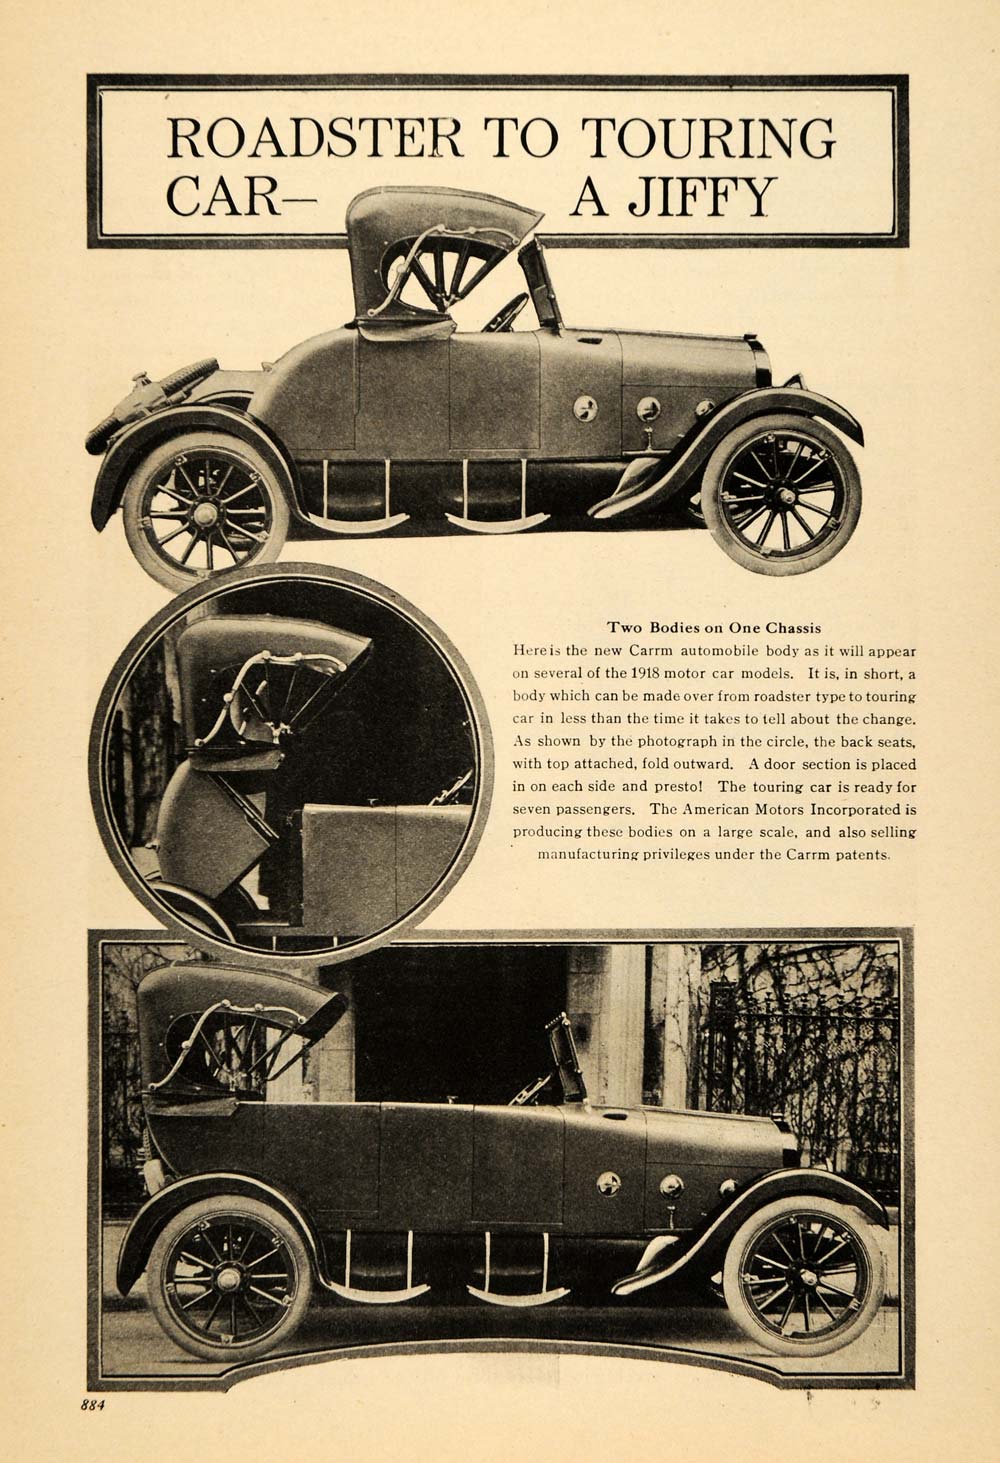 1917 Print American Motors Carrm Roadster Touring Car - ORIGINAL HISTORIC ILW2